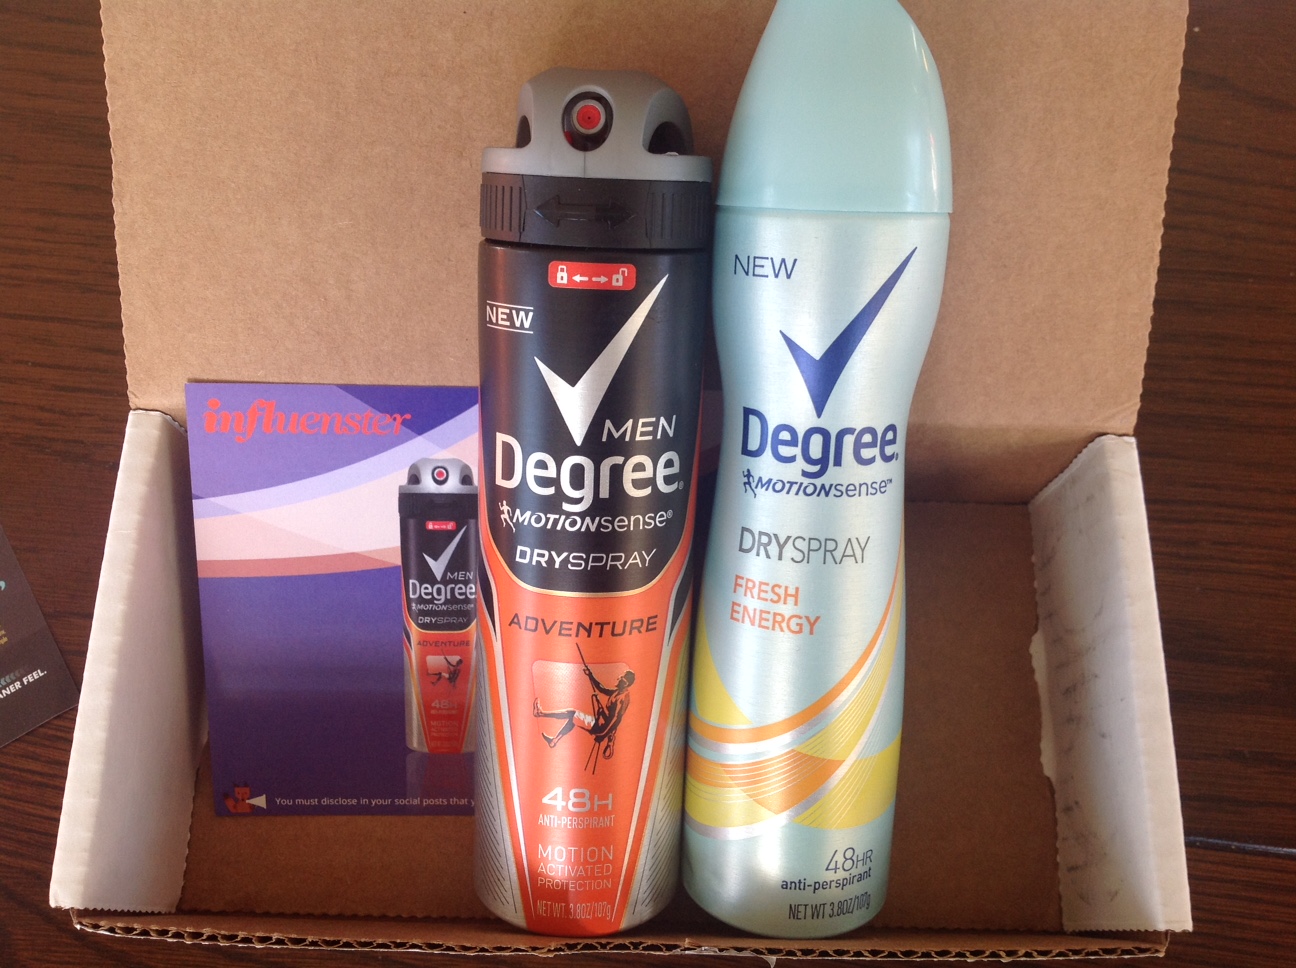 Degree Dry Spray Deodorant Review